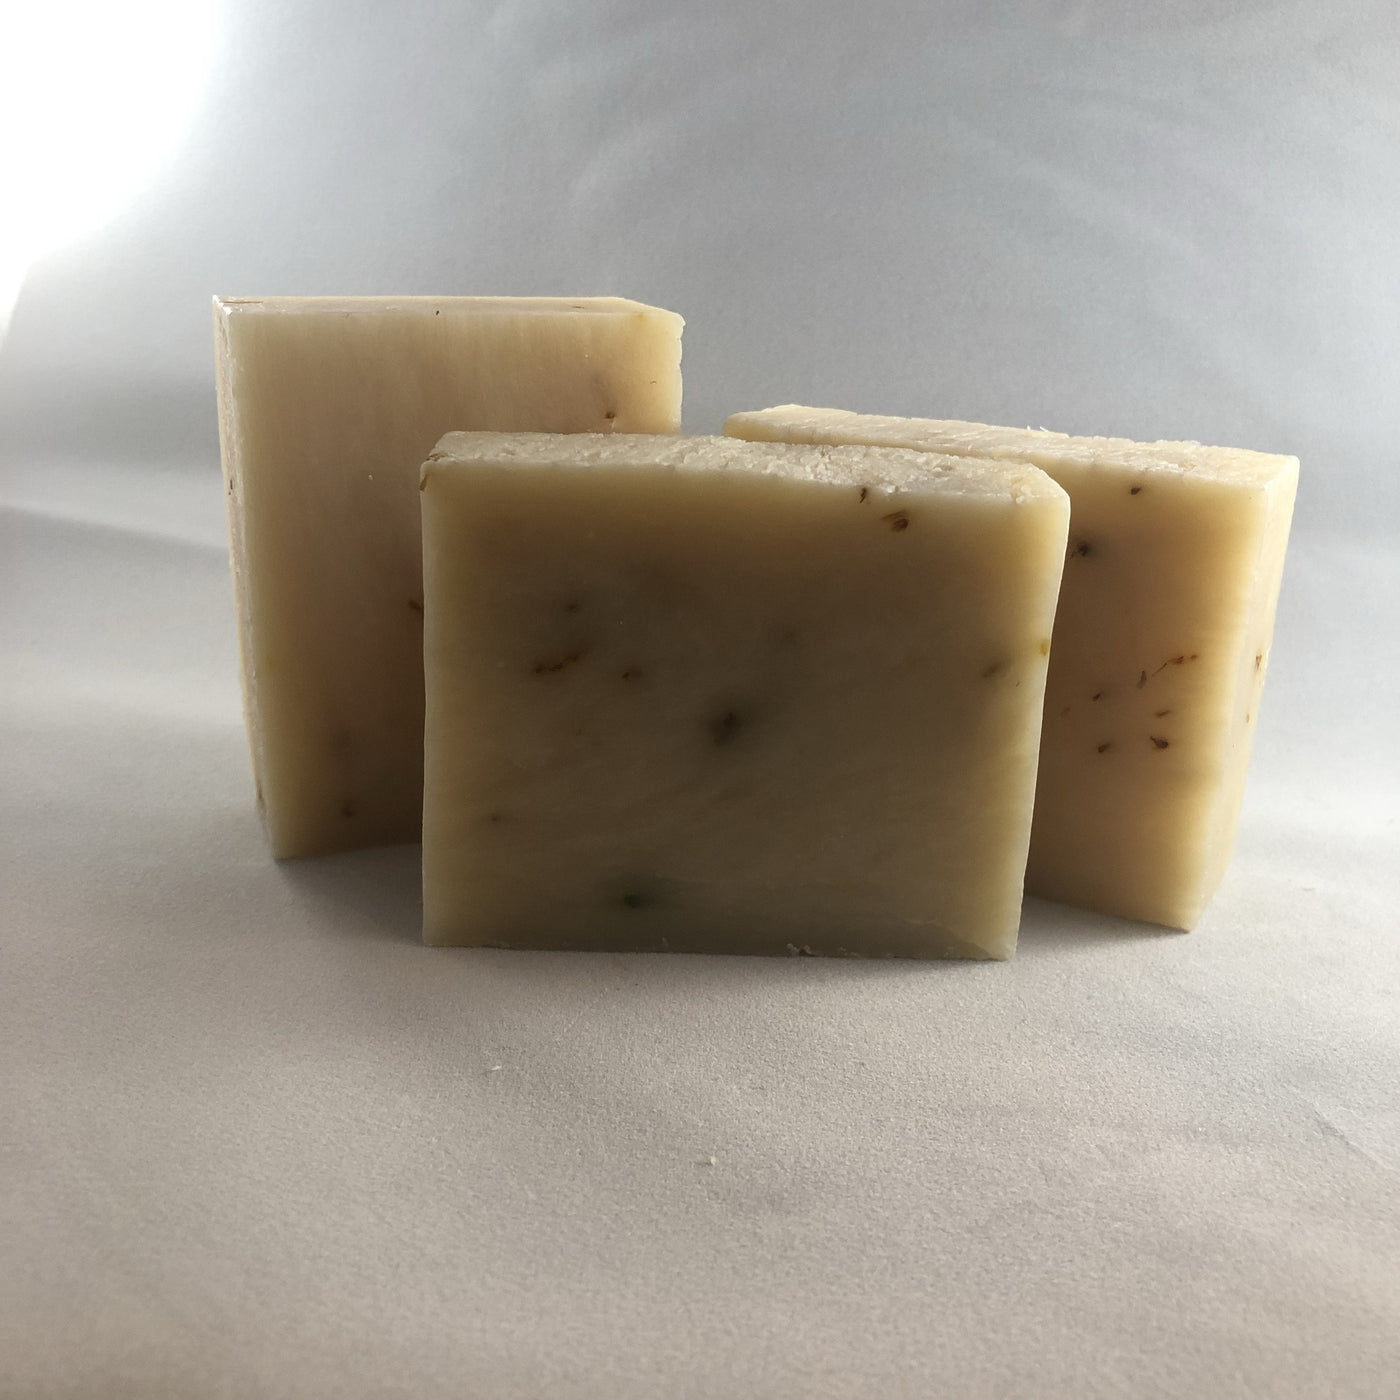 Aloe Calendula (Vegan, All Natural and Aloe) Bar Soap